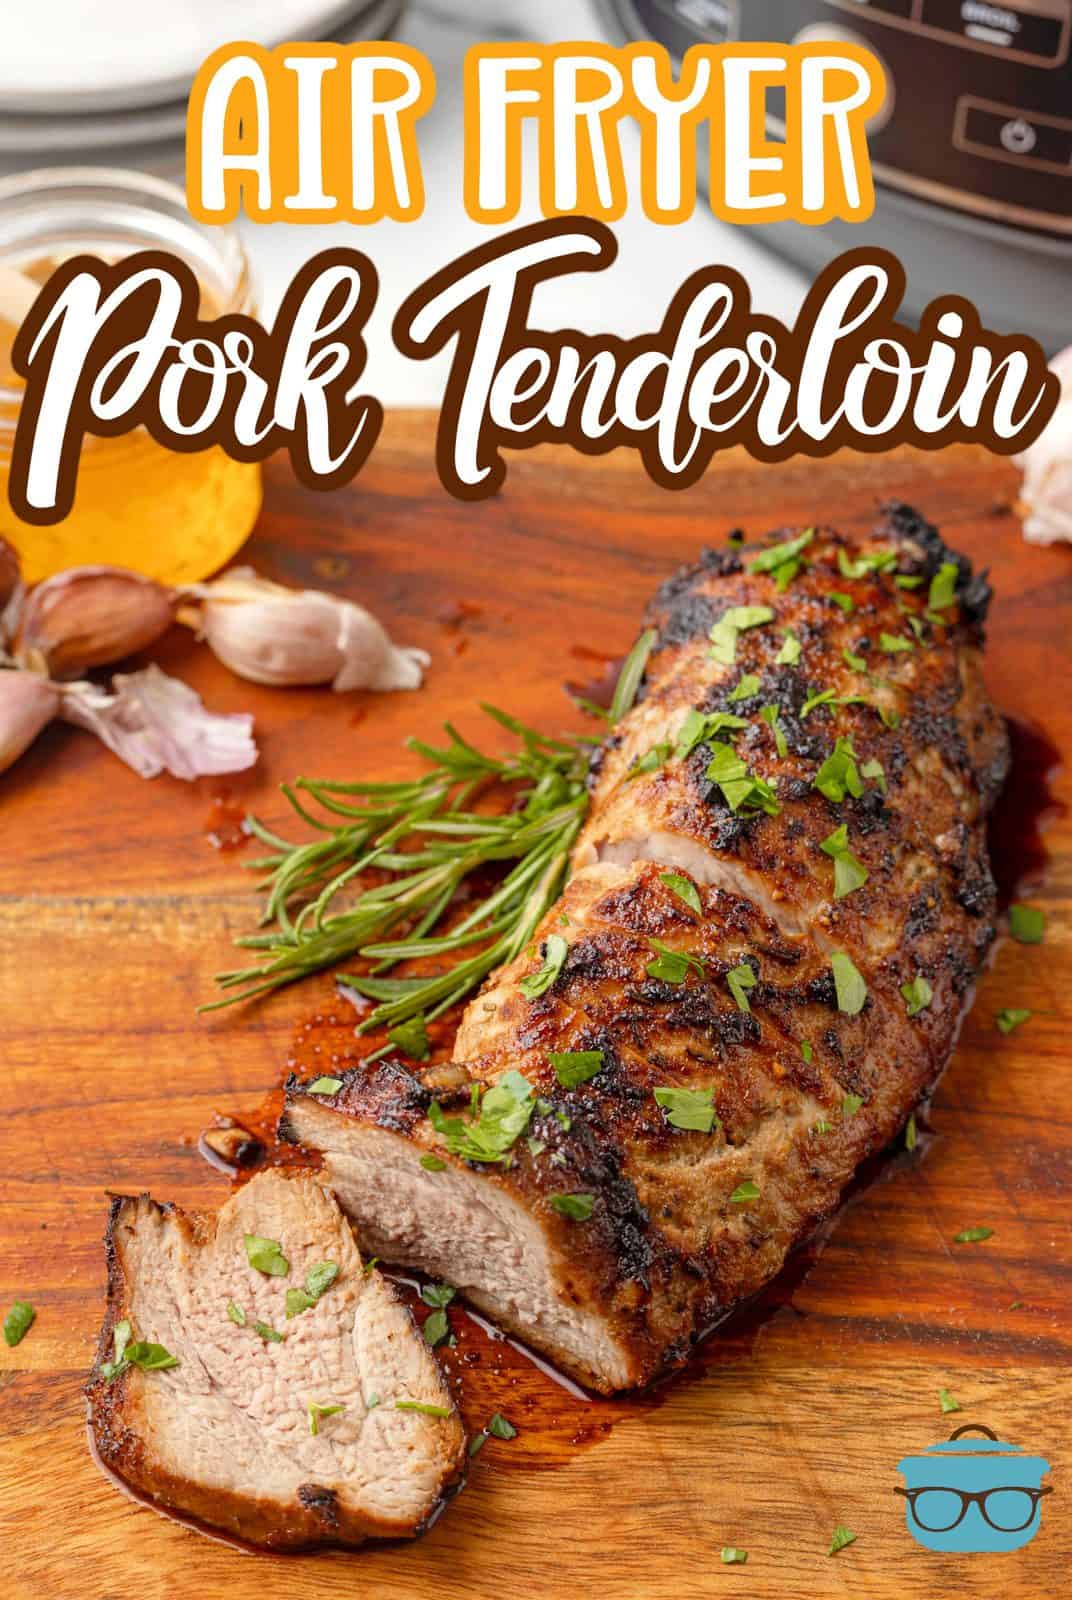 Pinterest image of Air Fryer Pork Tenderloin with a few slices cut off.